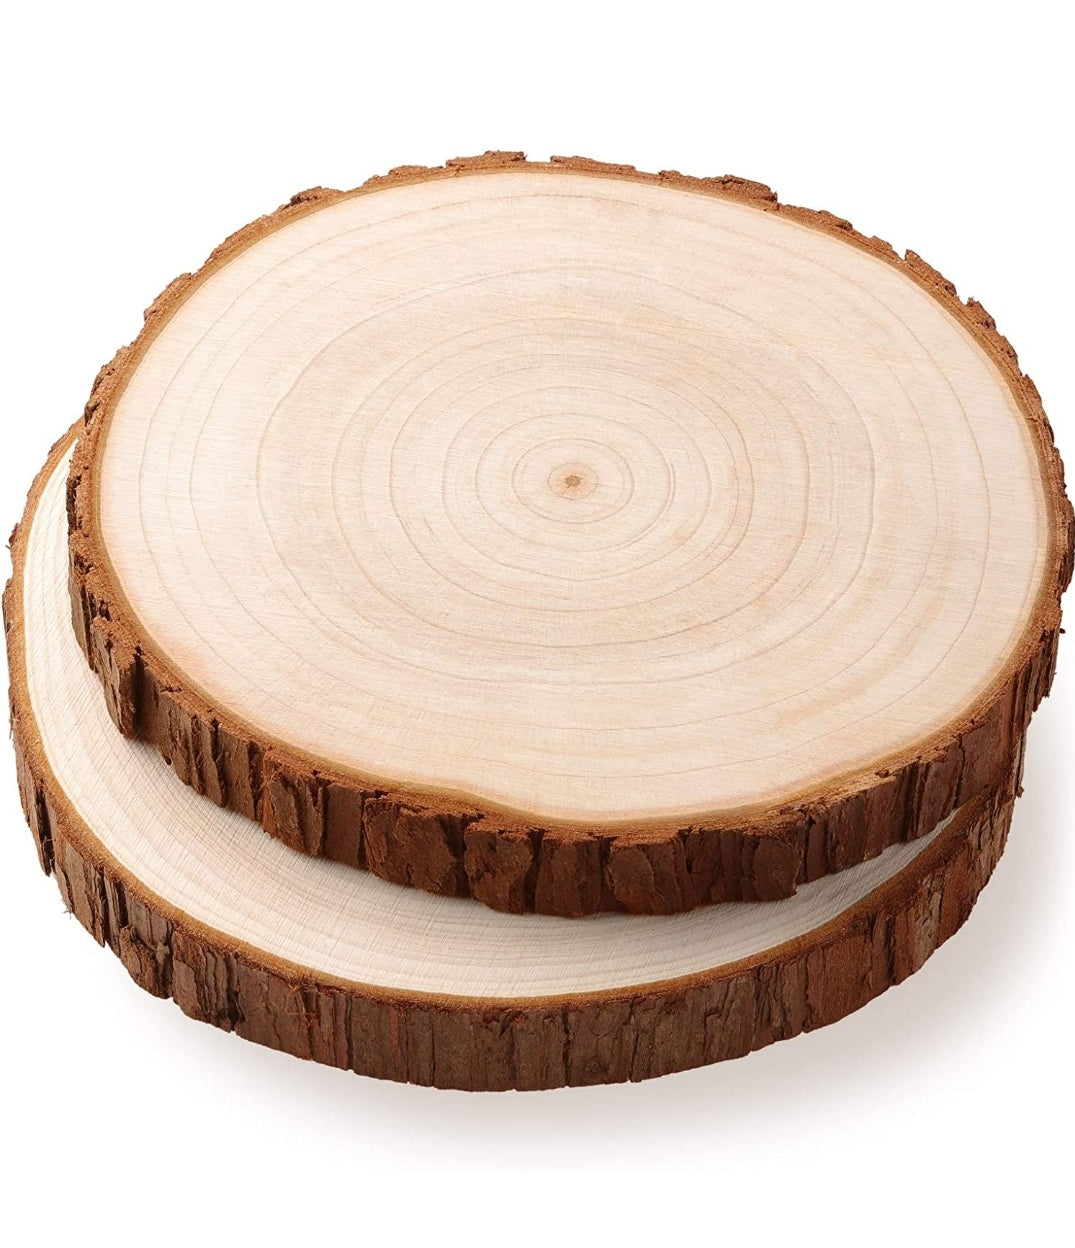 Base legno corteccia 24-25 cm – aregoladarteshop